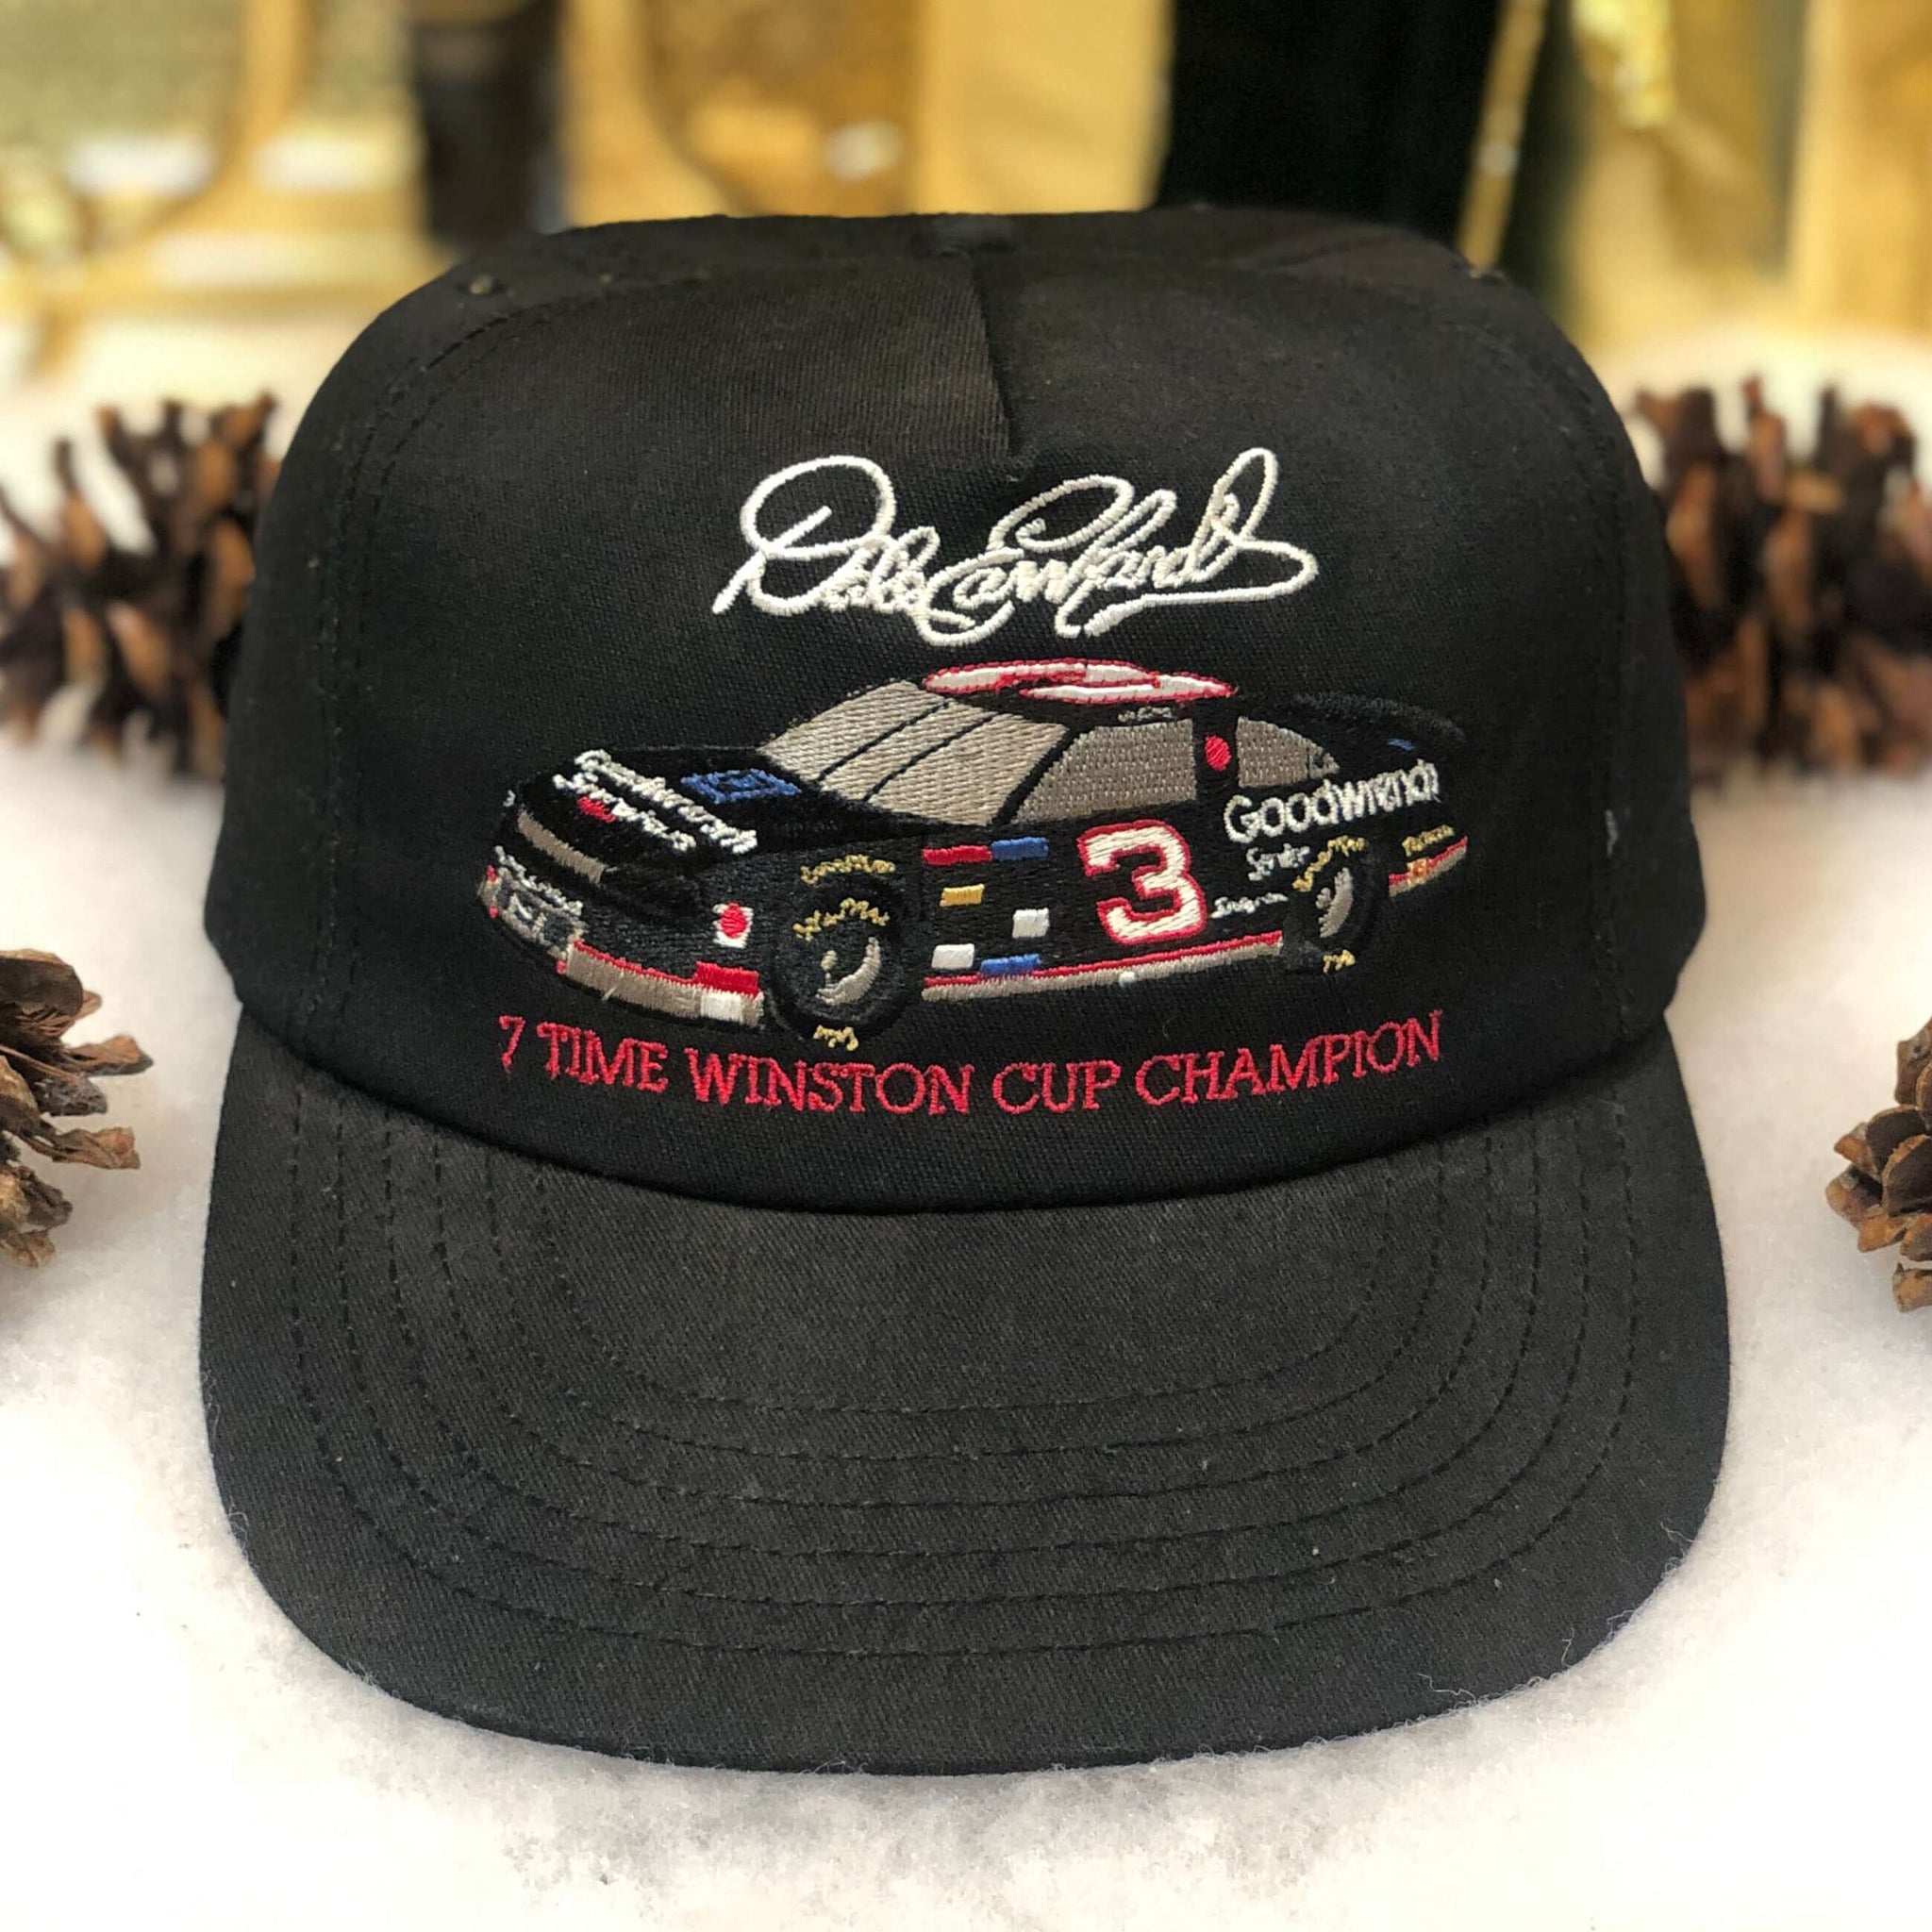 Vintage NASCAR Dale Earnhardt 7x Winston Cup Champion Sports Image Twill Snapback Hat